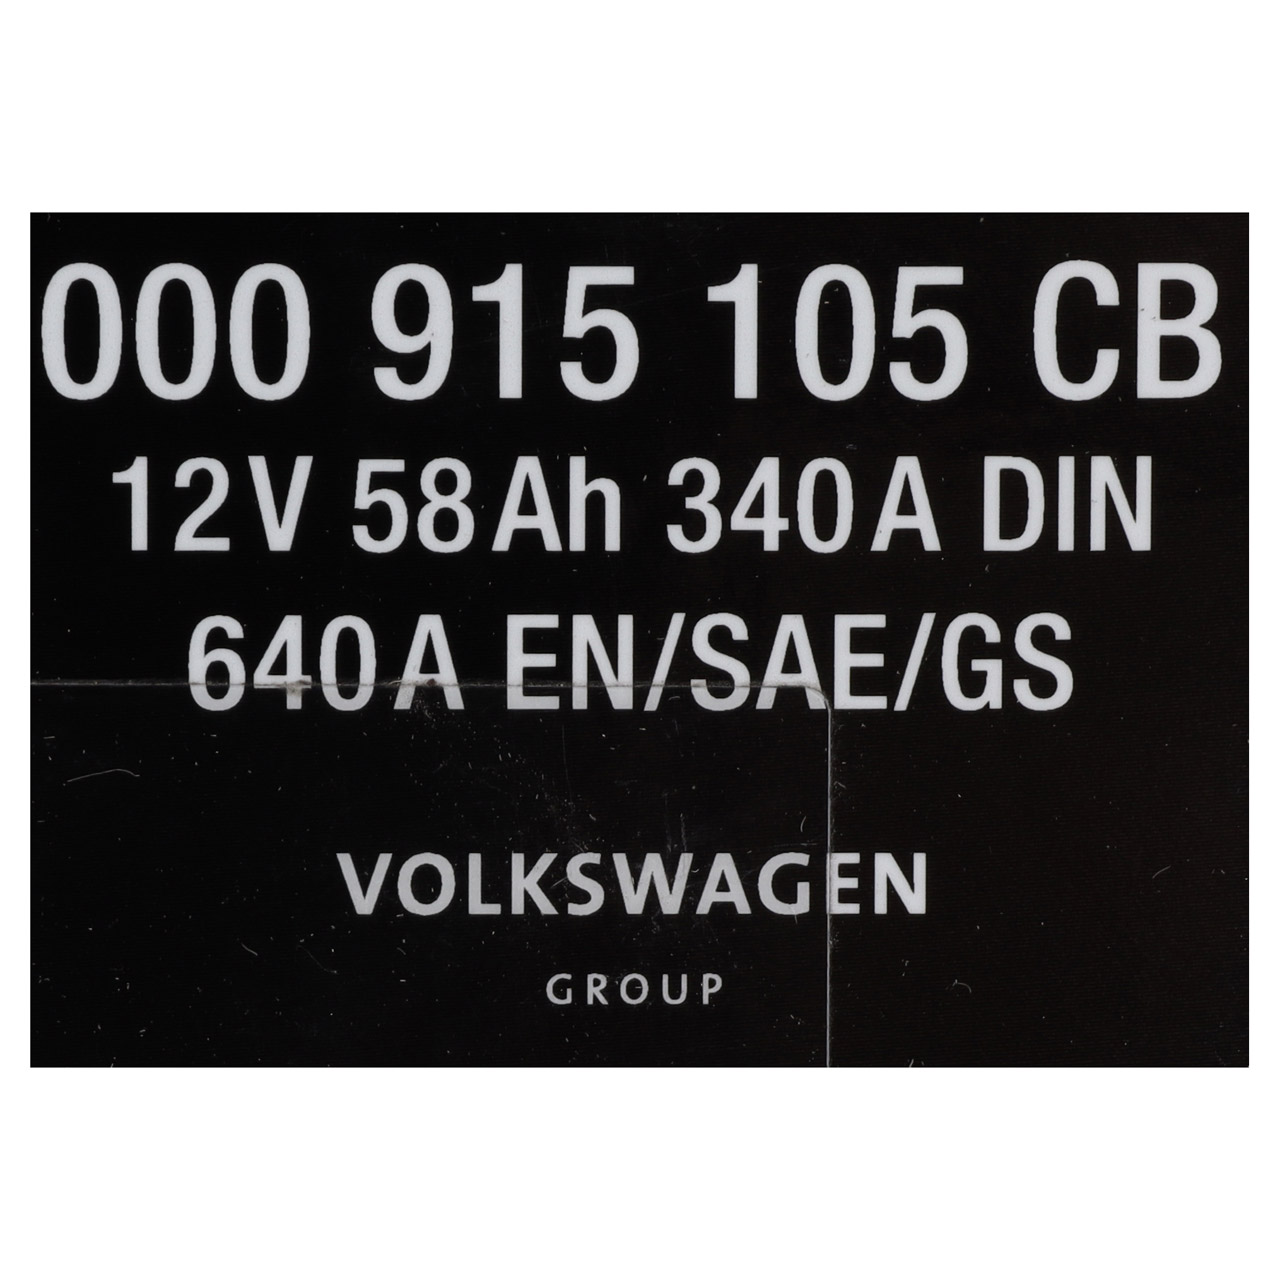 ORIGINAL VW Autobatterie Batterie Starterbatterie 12V 58Ah 340/340A 000915105CB